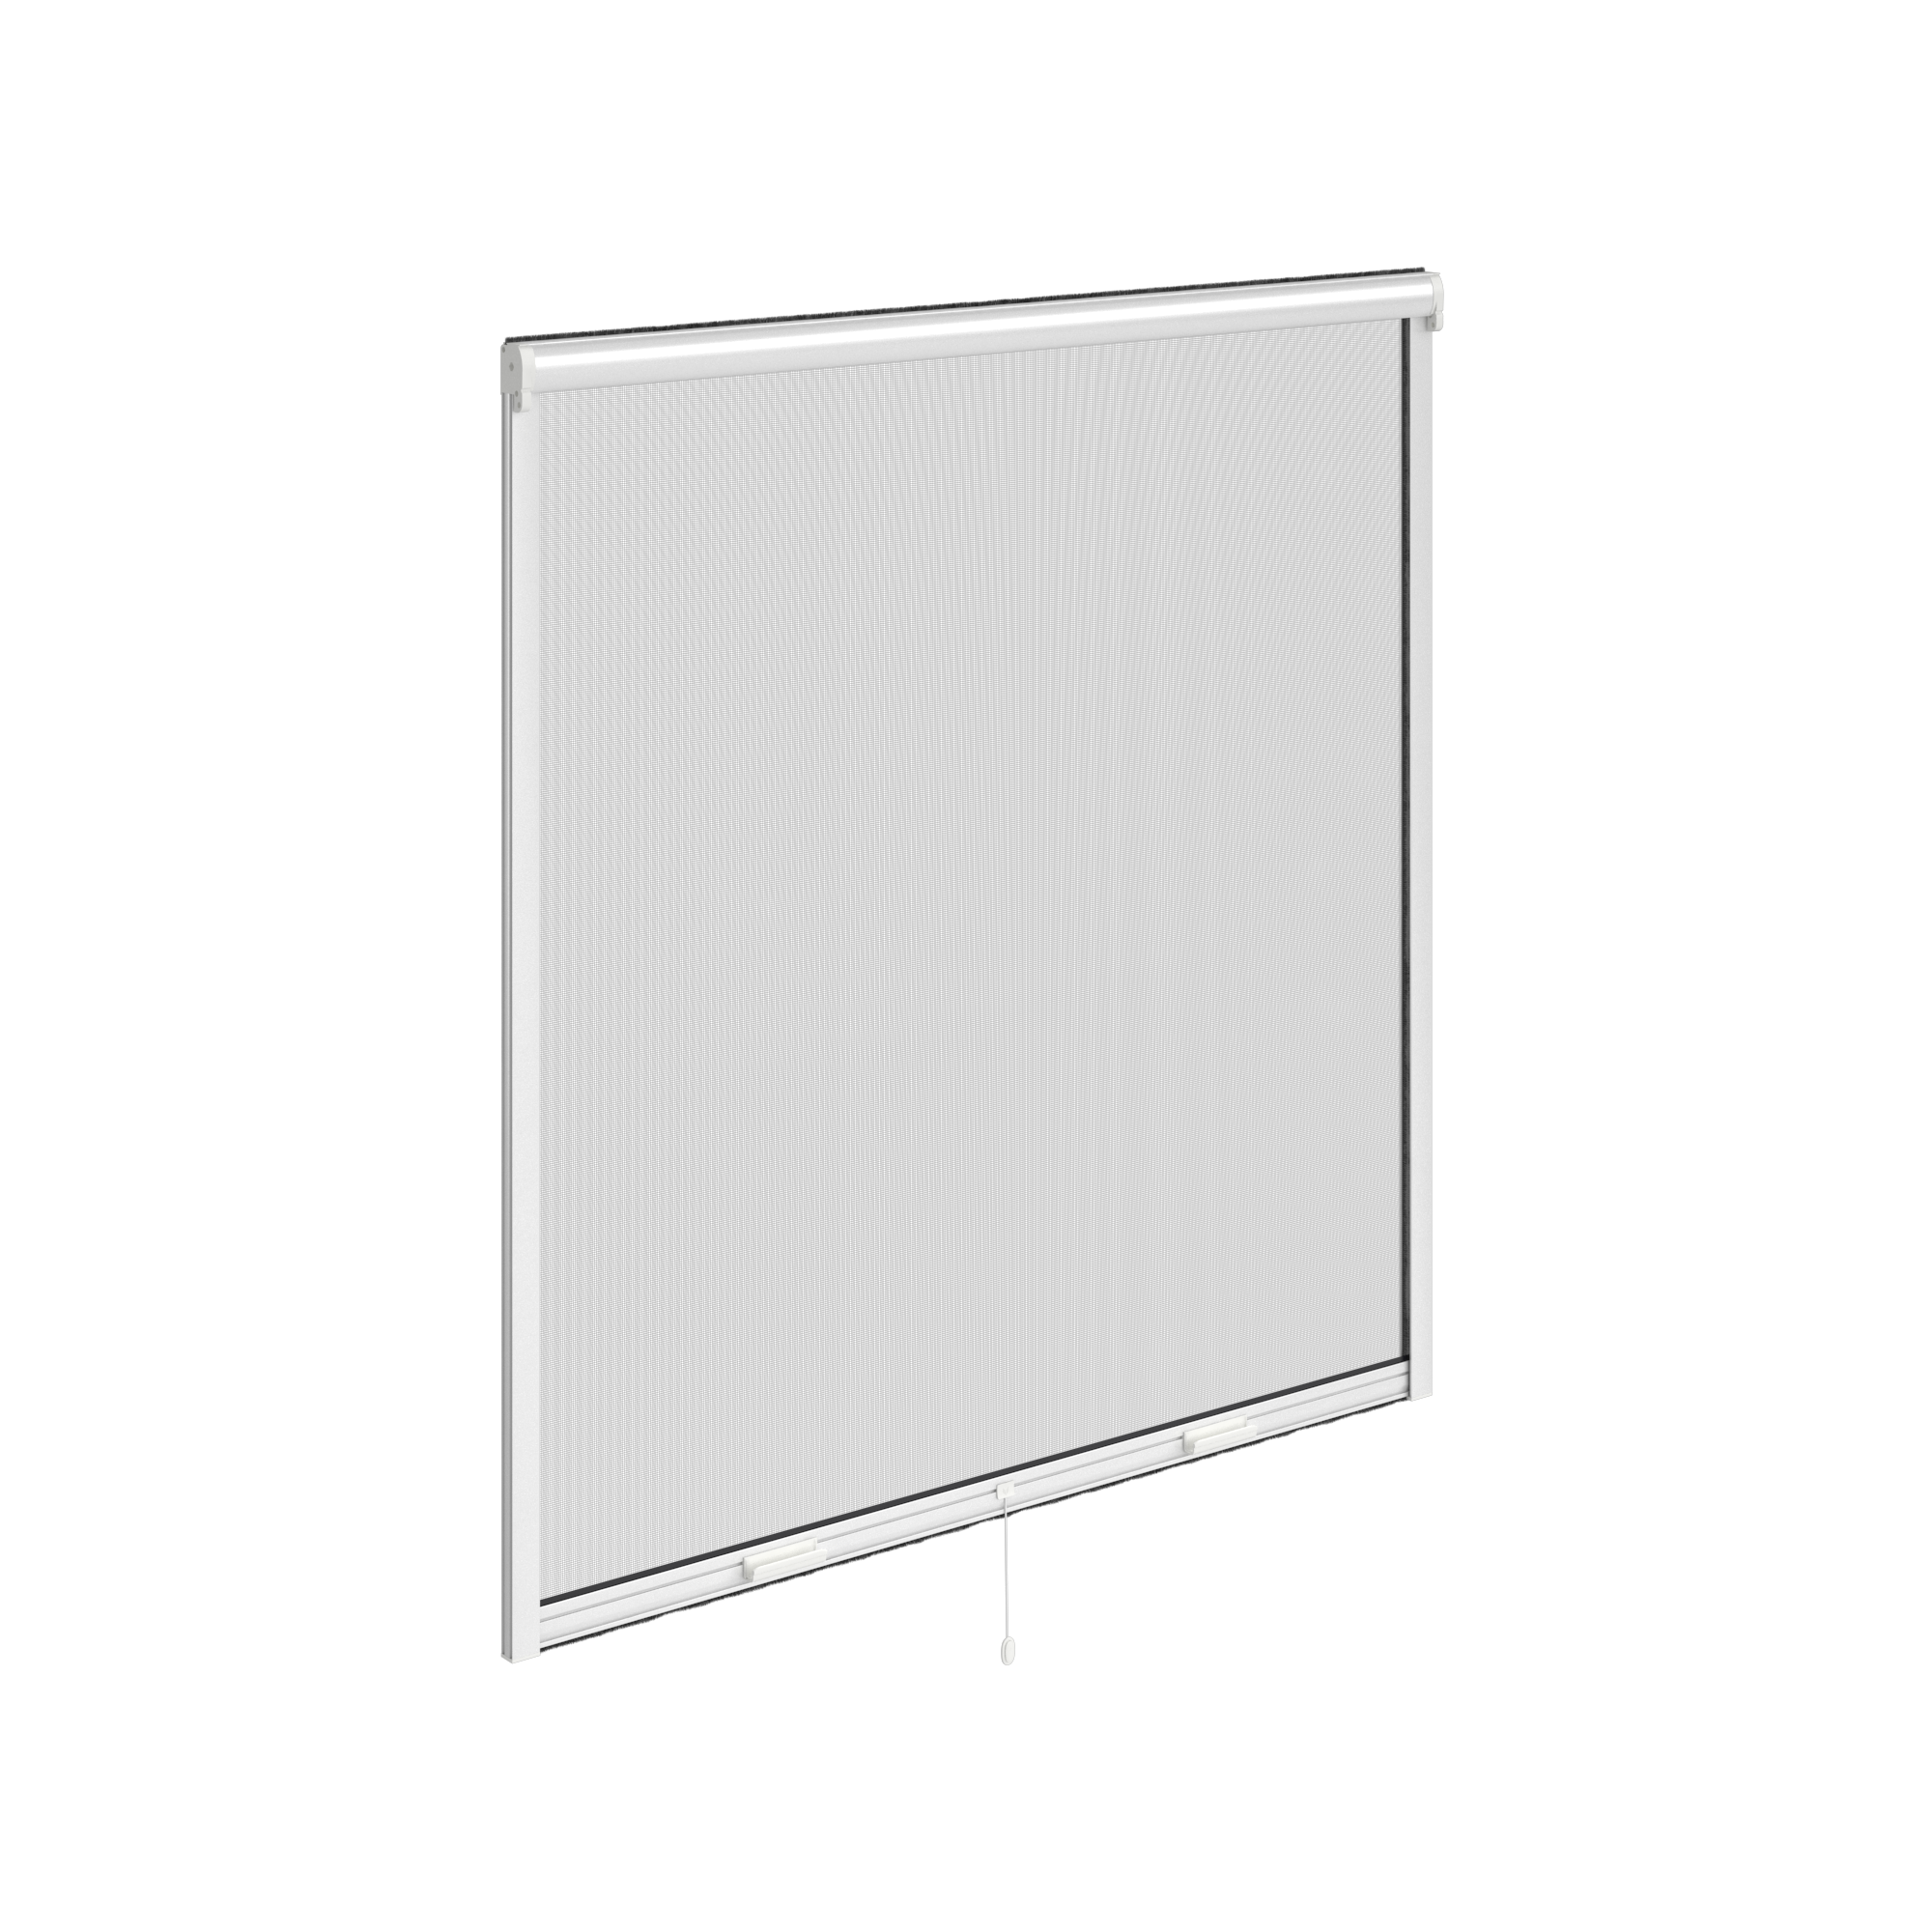 Mosquitera enrollable artens n2 con tela de fibra de vidrio de 160x160 cm